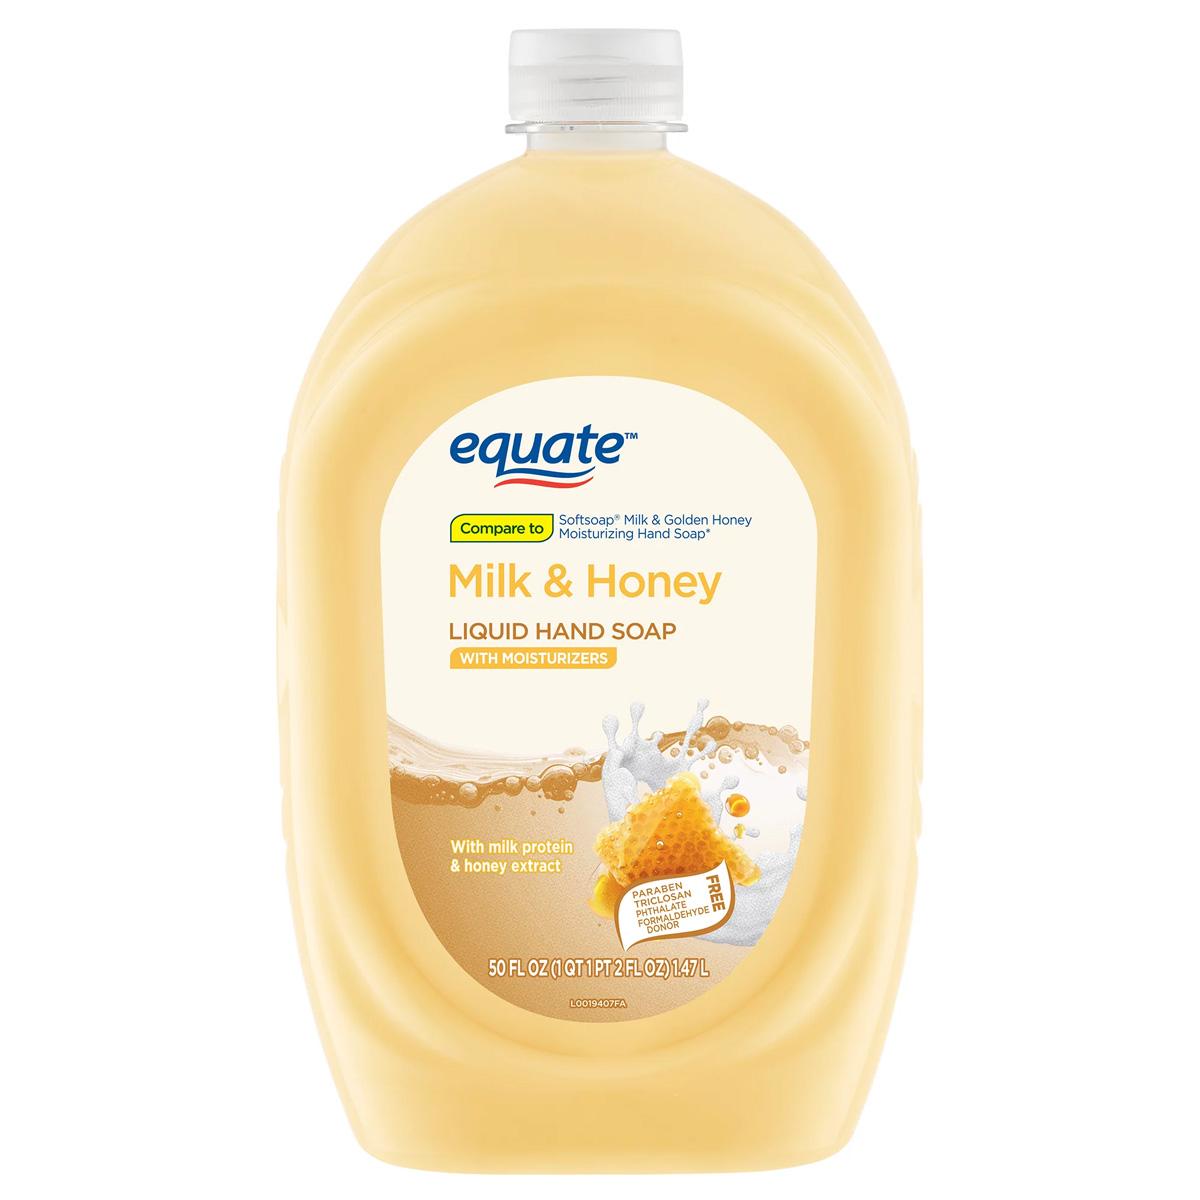 Equate Milk and Honey Liquid Hand Soap Refill for $2.97